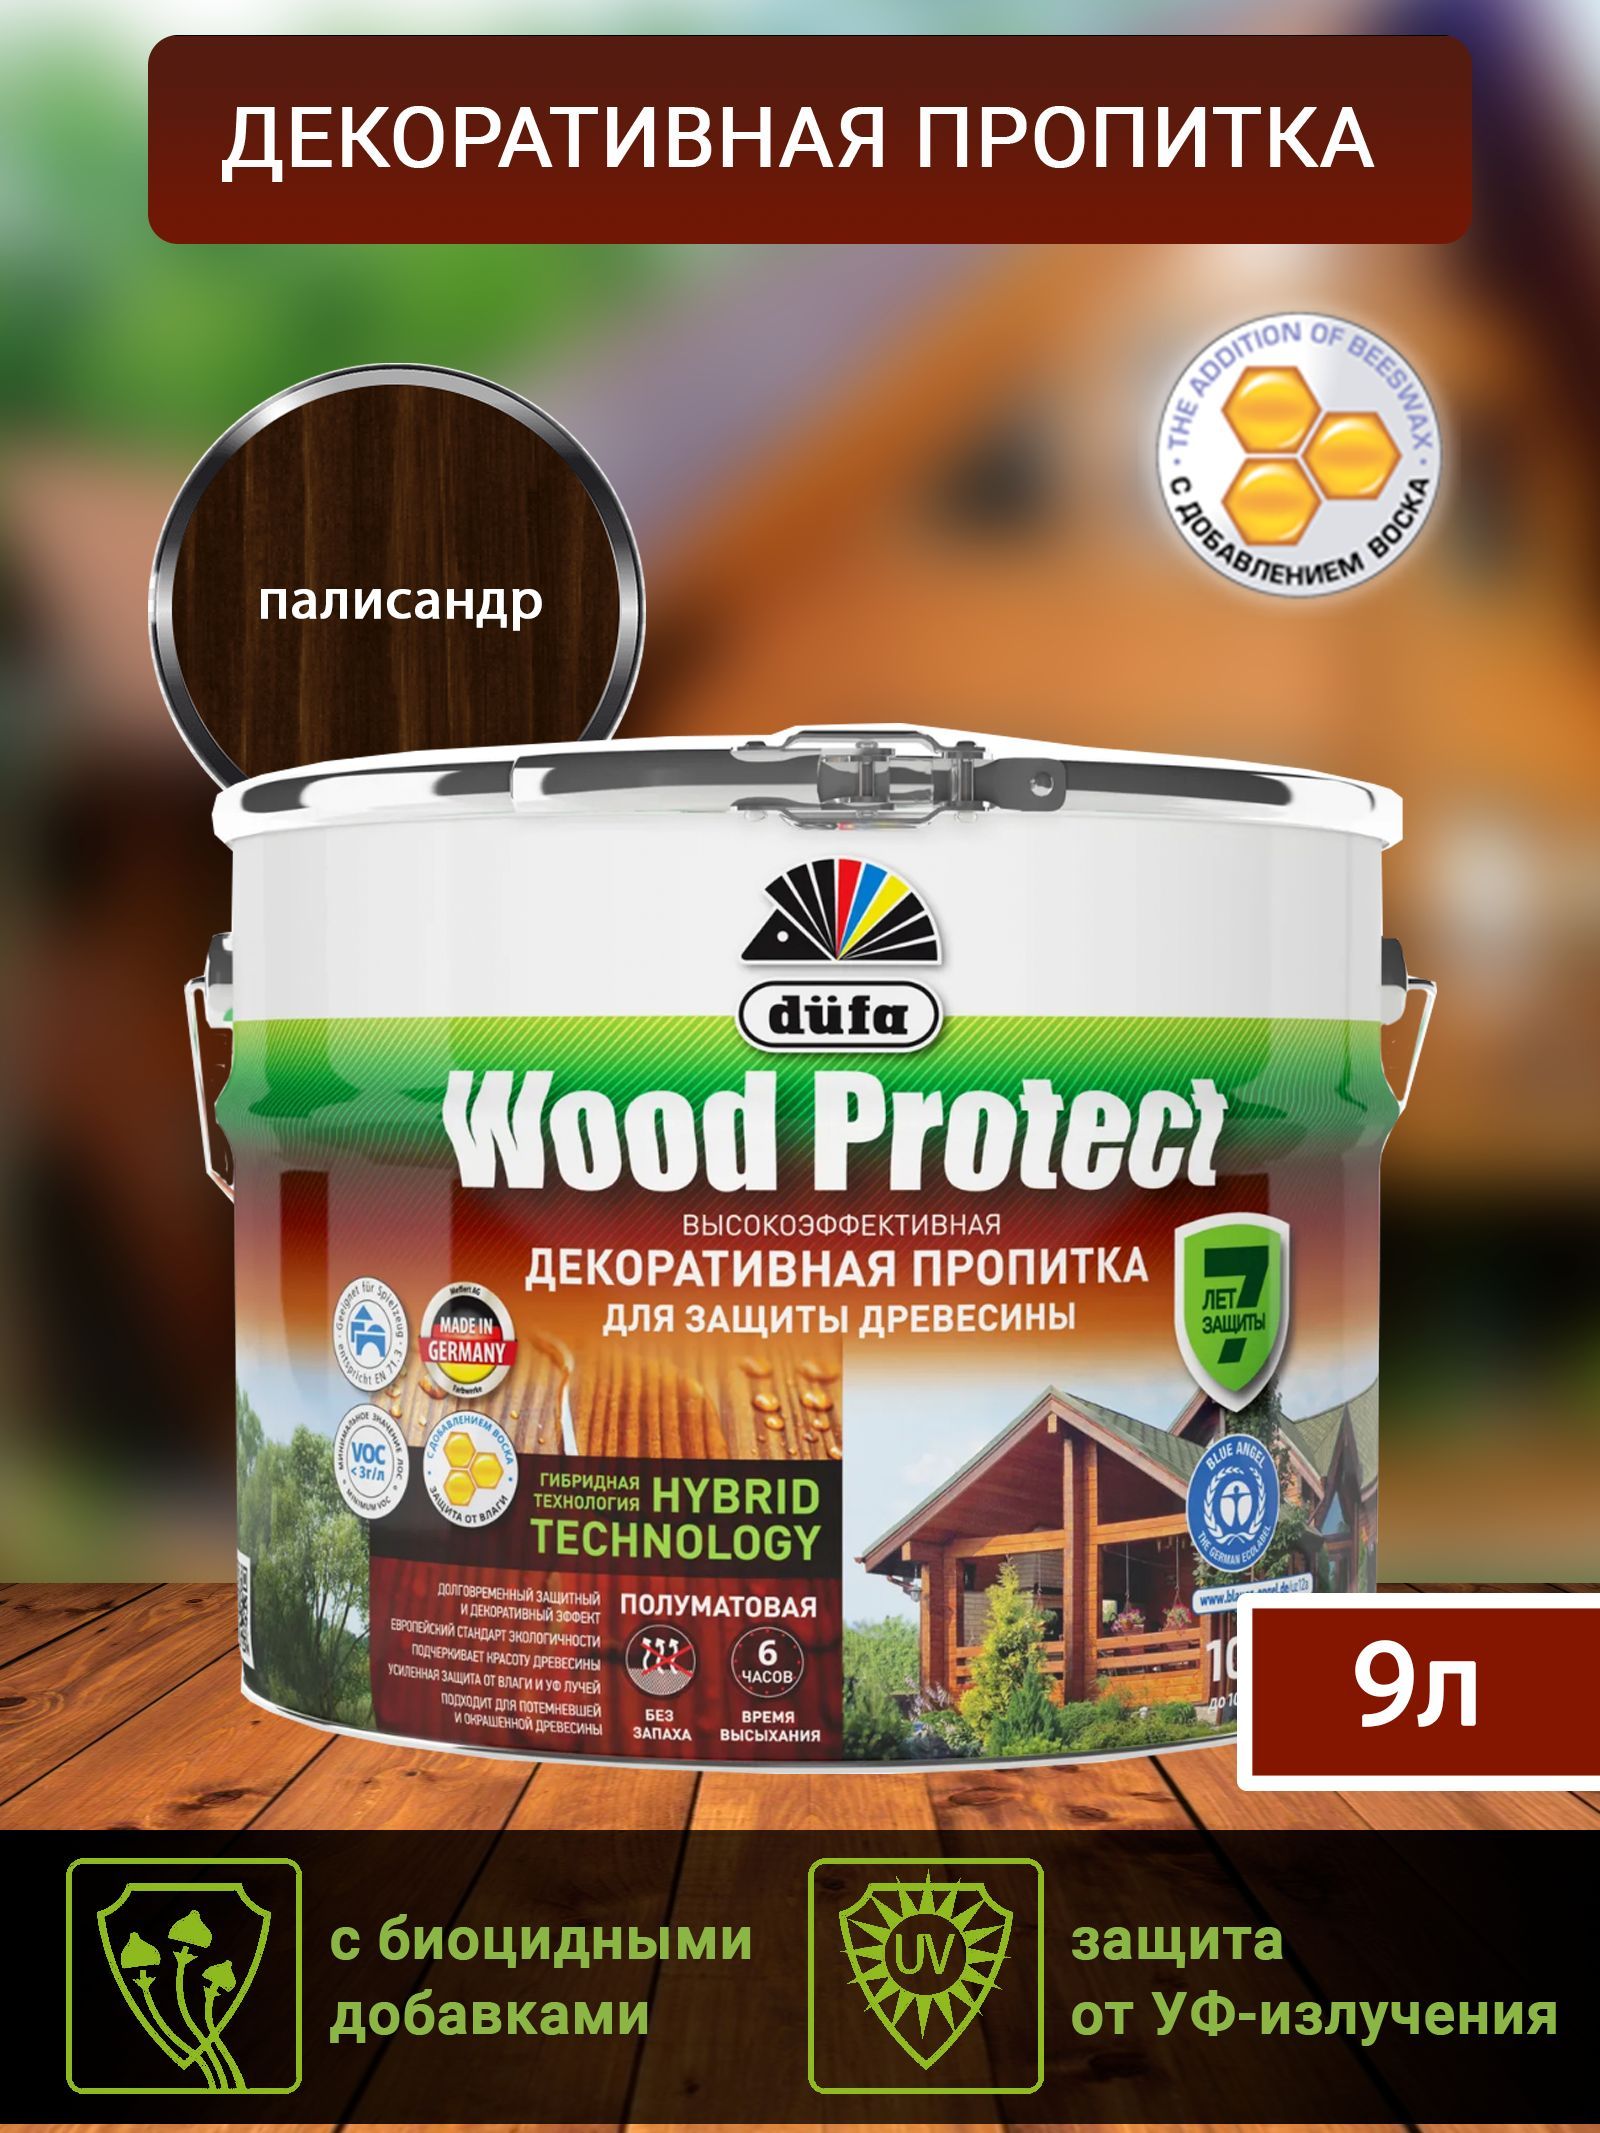 Dufa Пропитка “Wood Protect” для защиты древесины; палисандр 9 л, шт